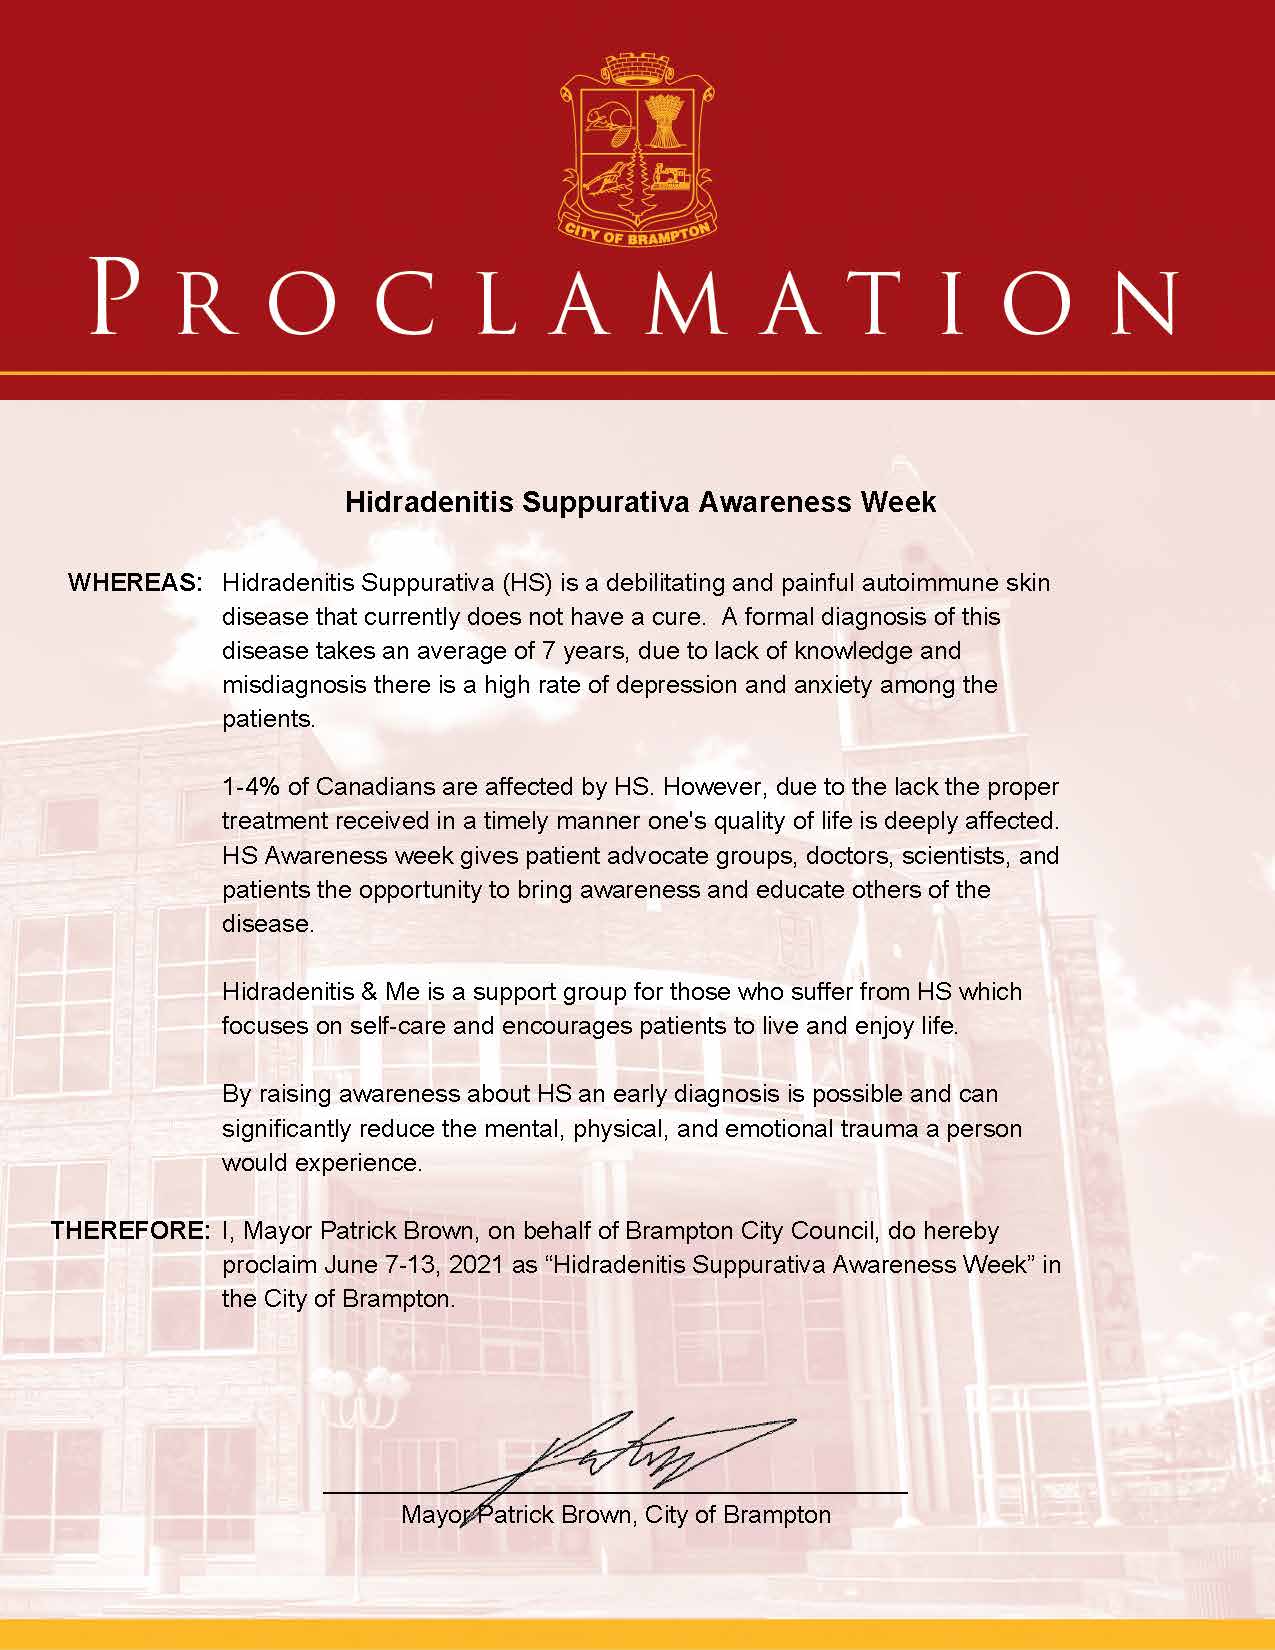 Brampton Proclamation Hidradenitis Suppurativa Awareness Week 06.7 13.2021 1